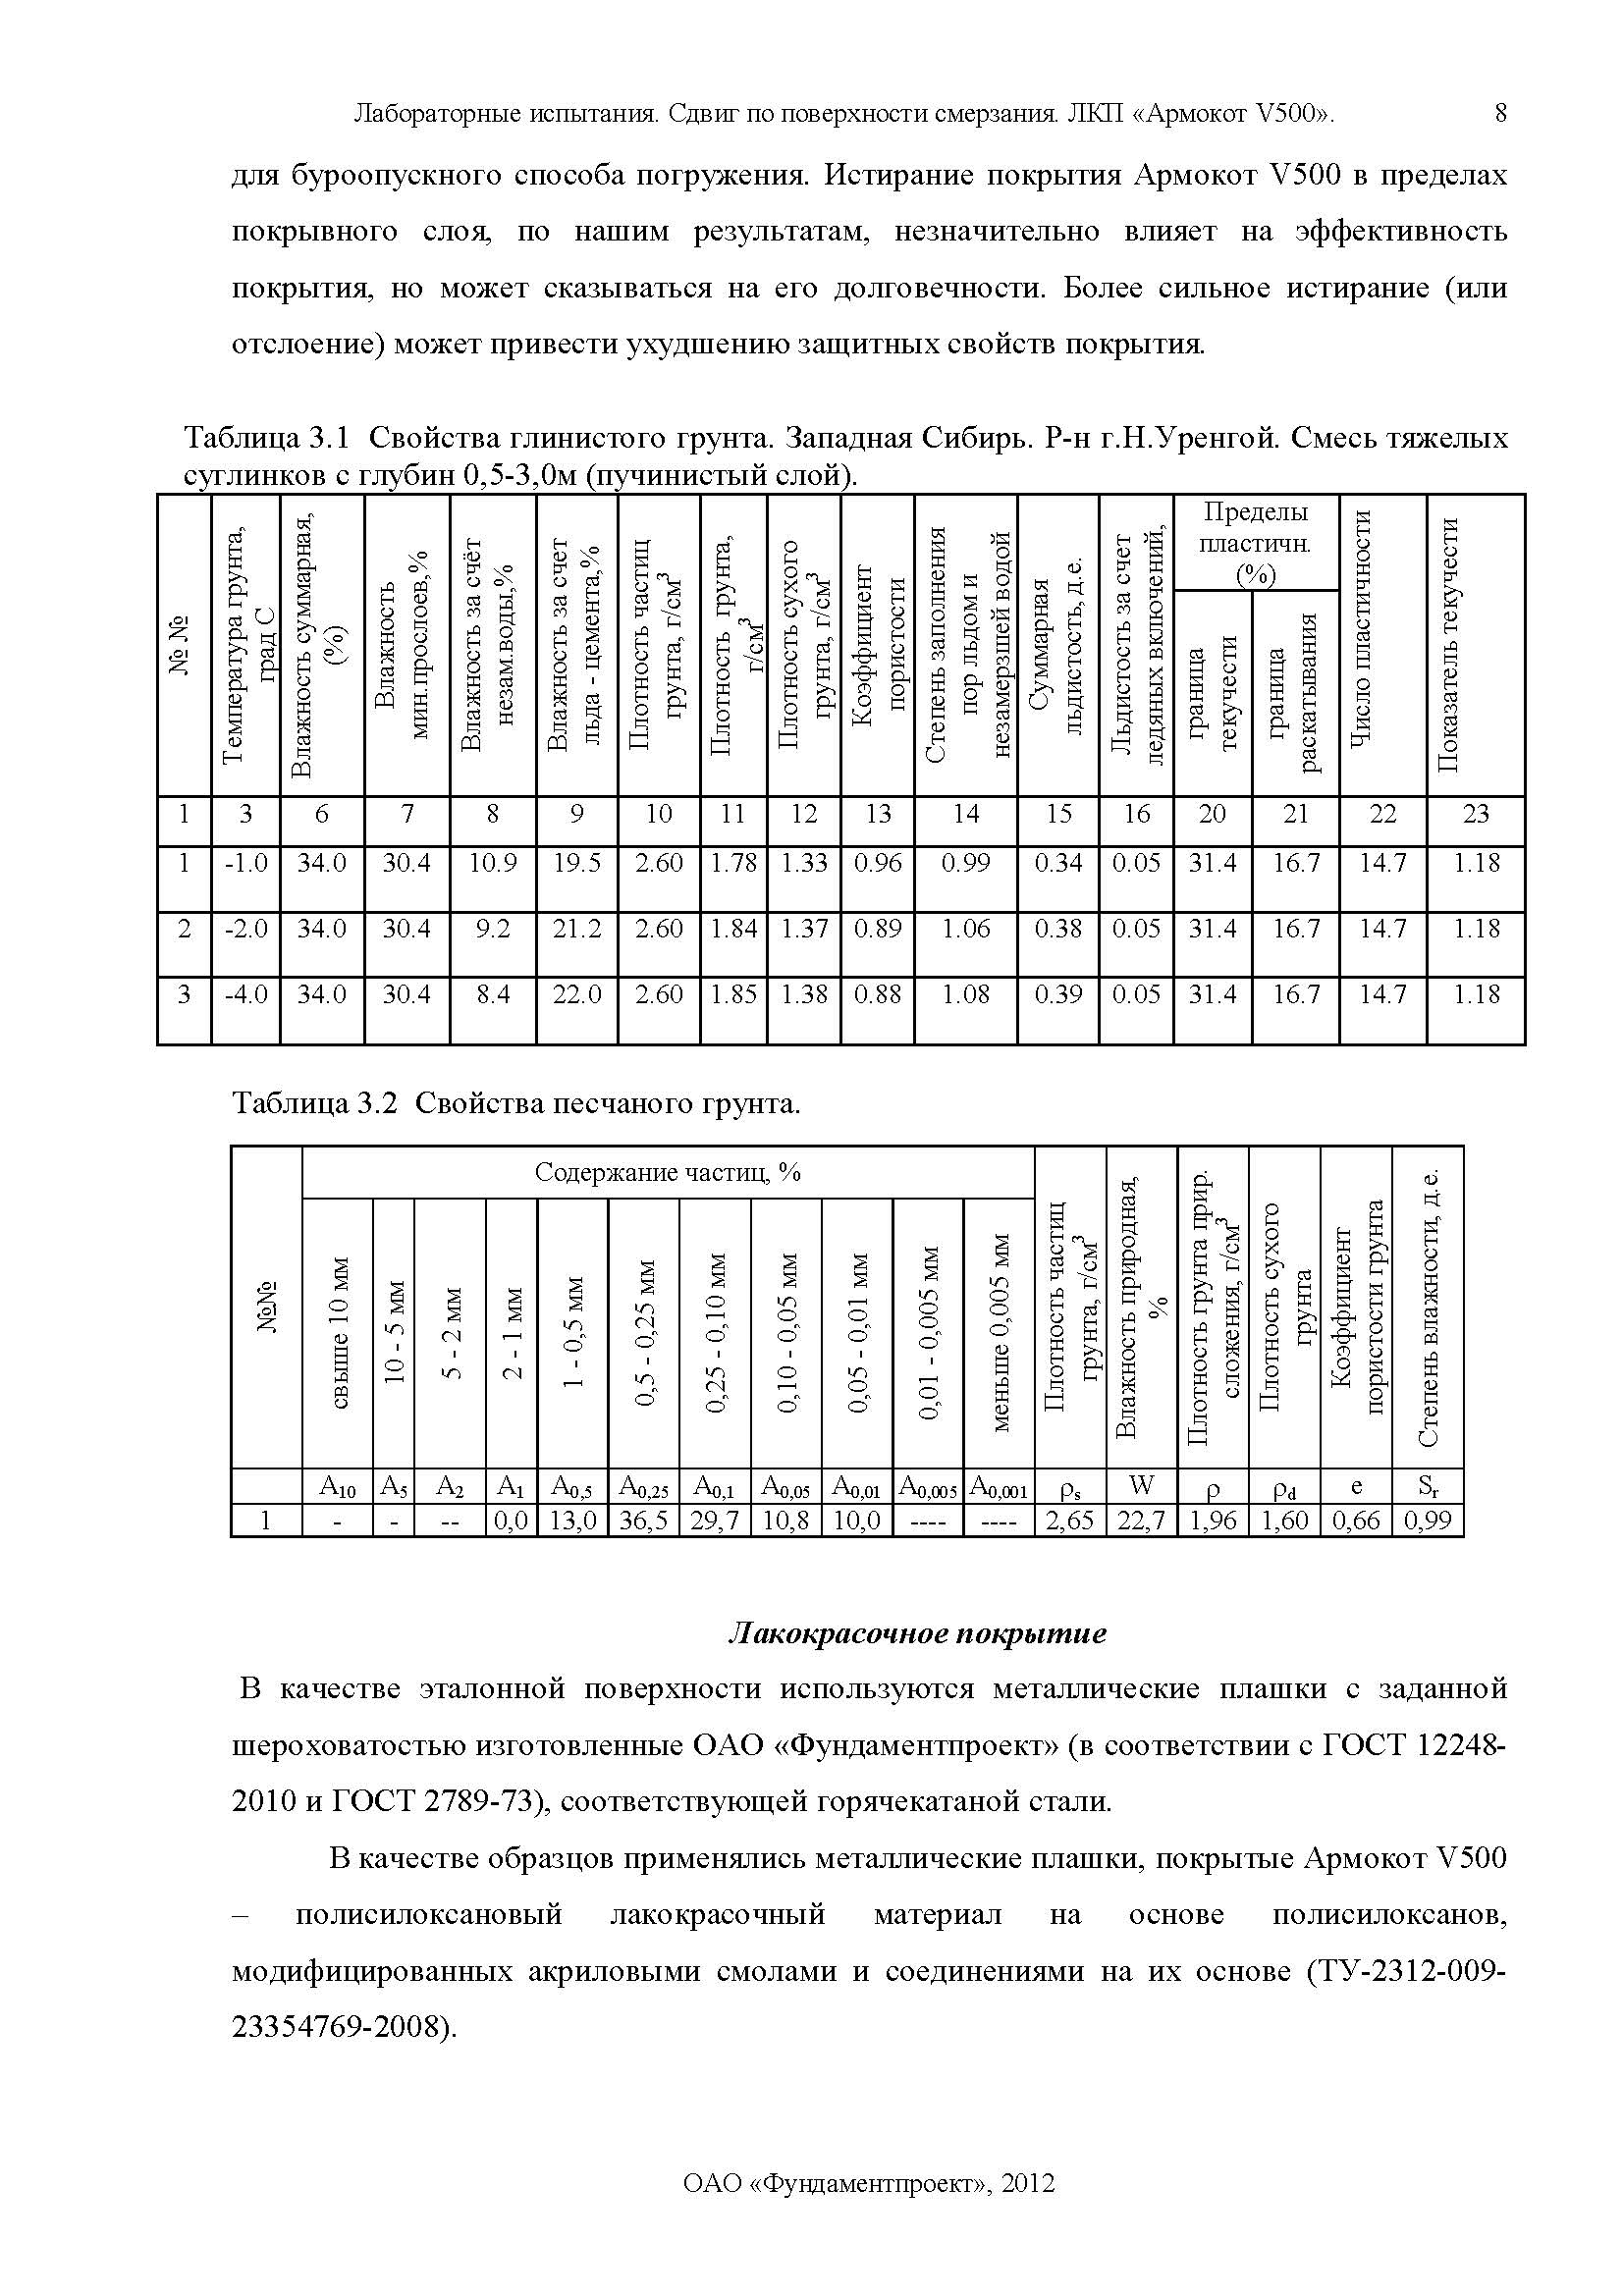 Отчет по сваям Армокот V500 Фундаментпроект_Страница_08